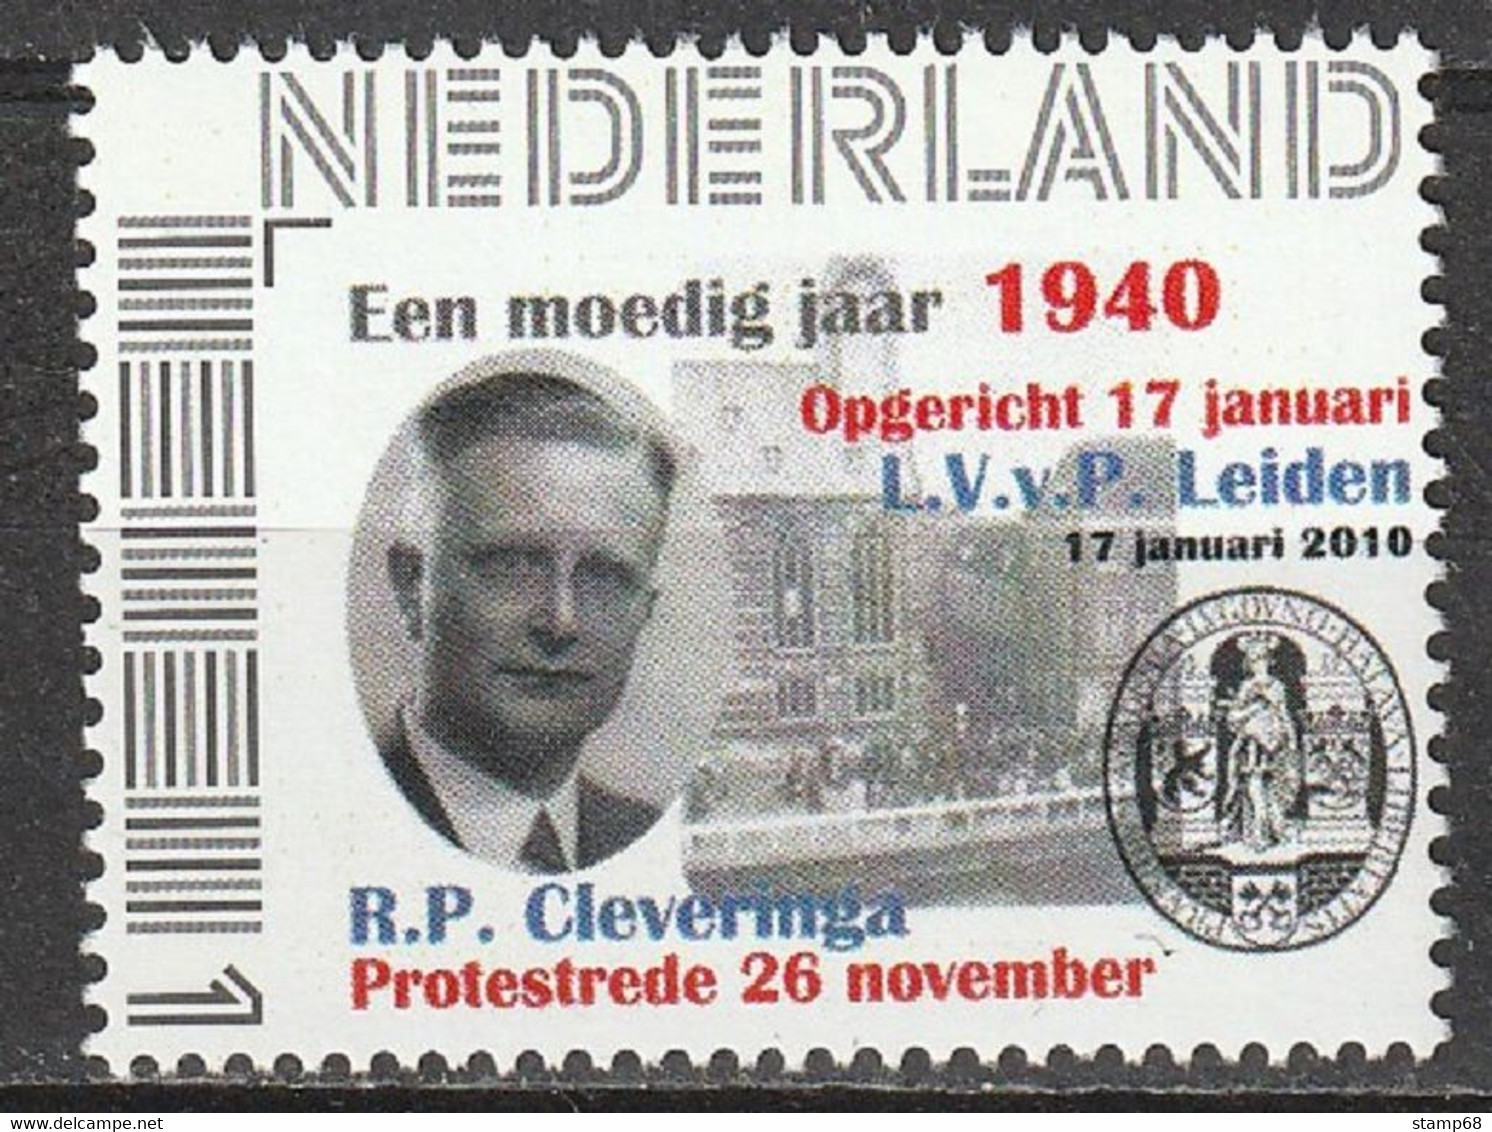 Nederland NVPH 2751 Persoonlijke Zegels Protestrede Cleveringa Oprichting LvVP Leiden 1940-2010 MNH Postfris - Personnalized Stamps